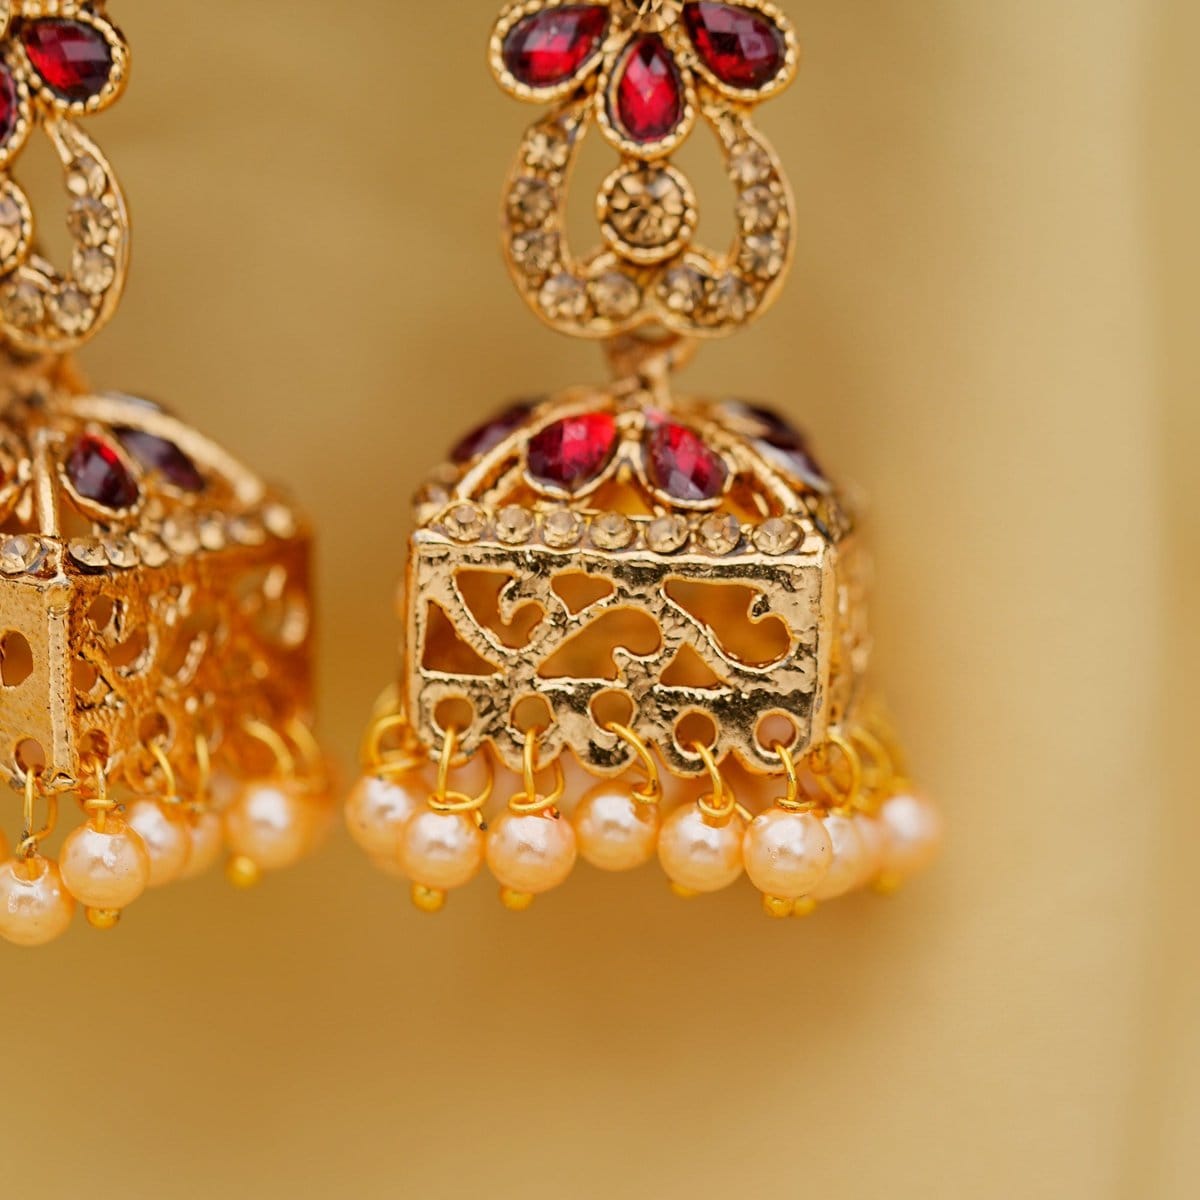 shivina earrings - Aganya kreation